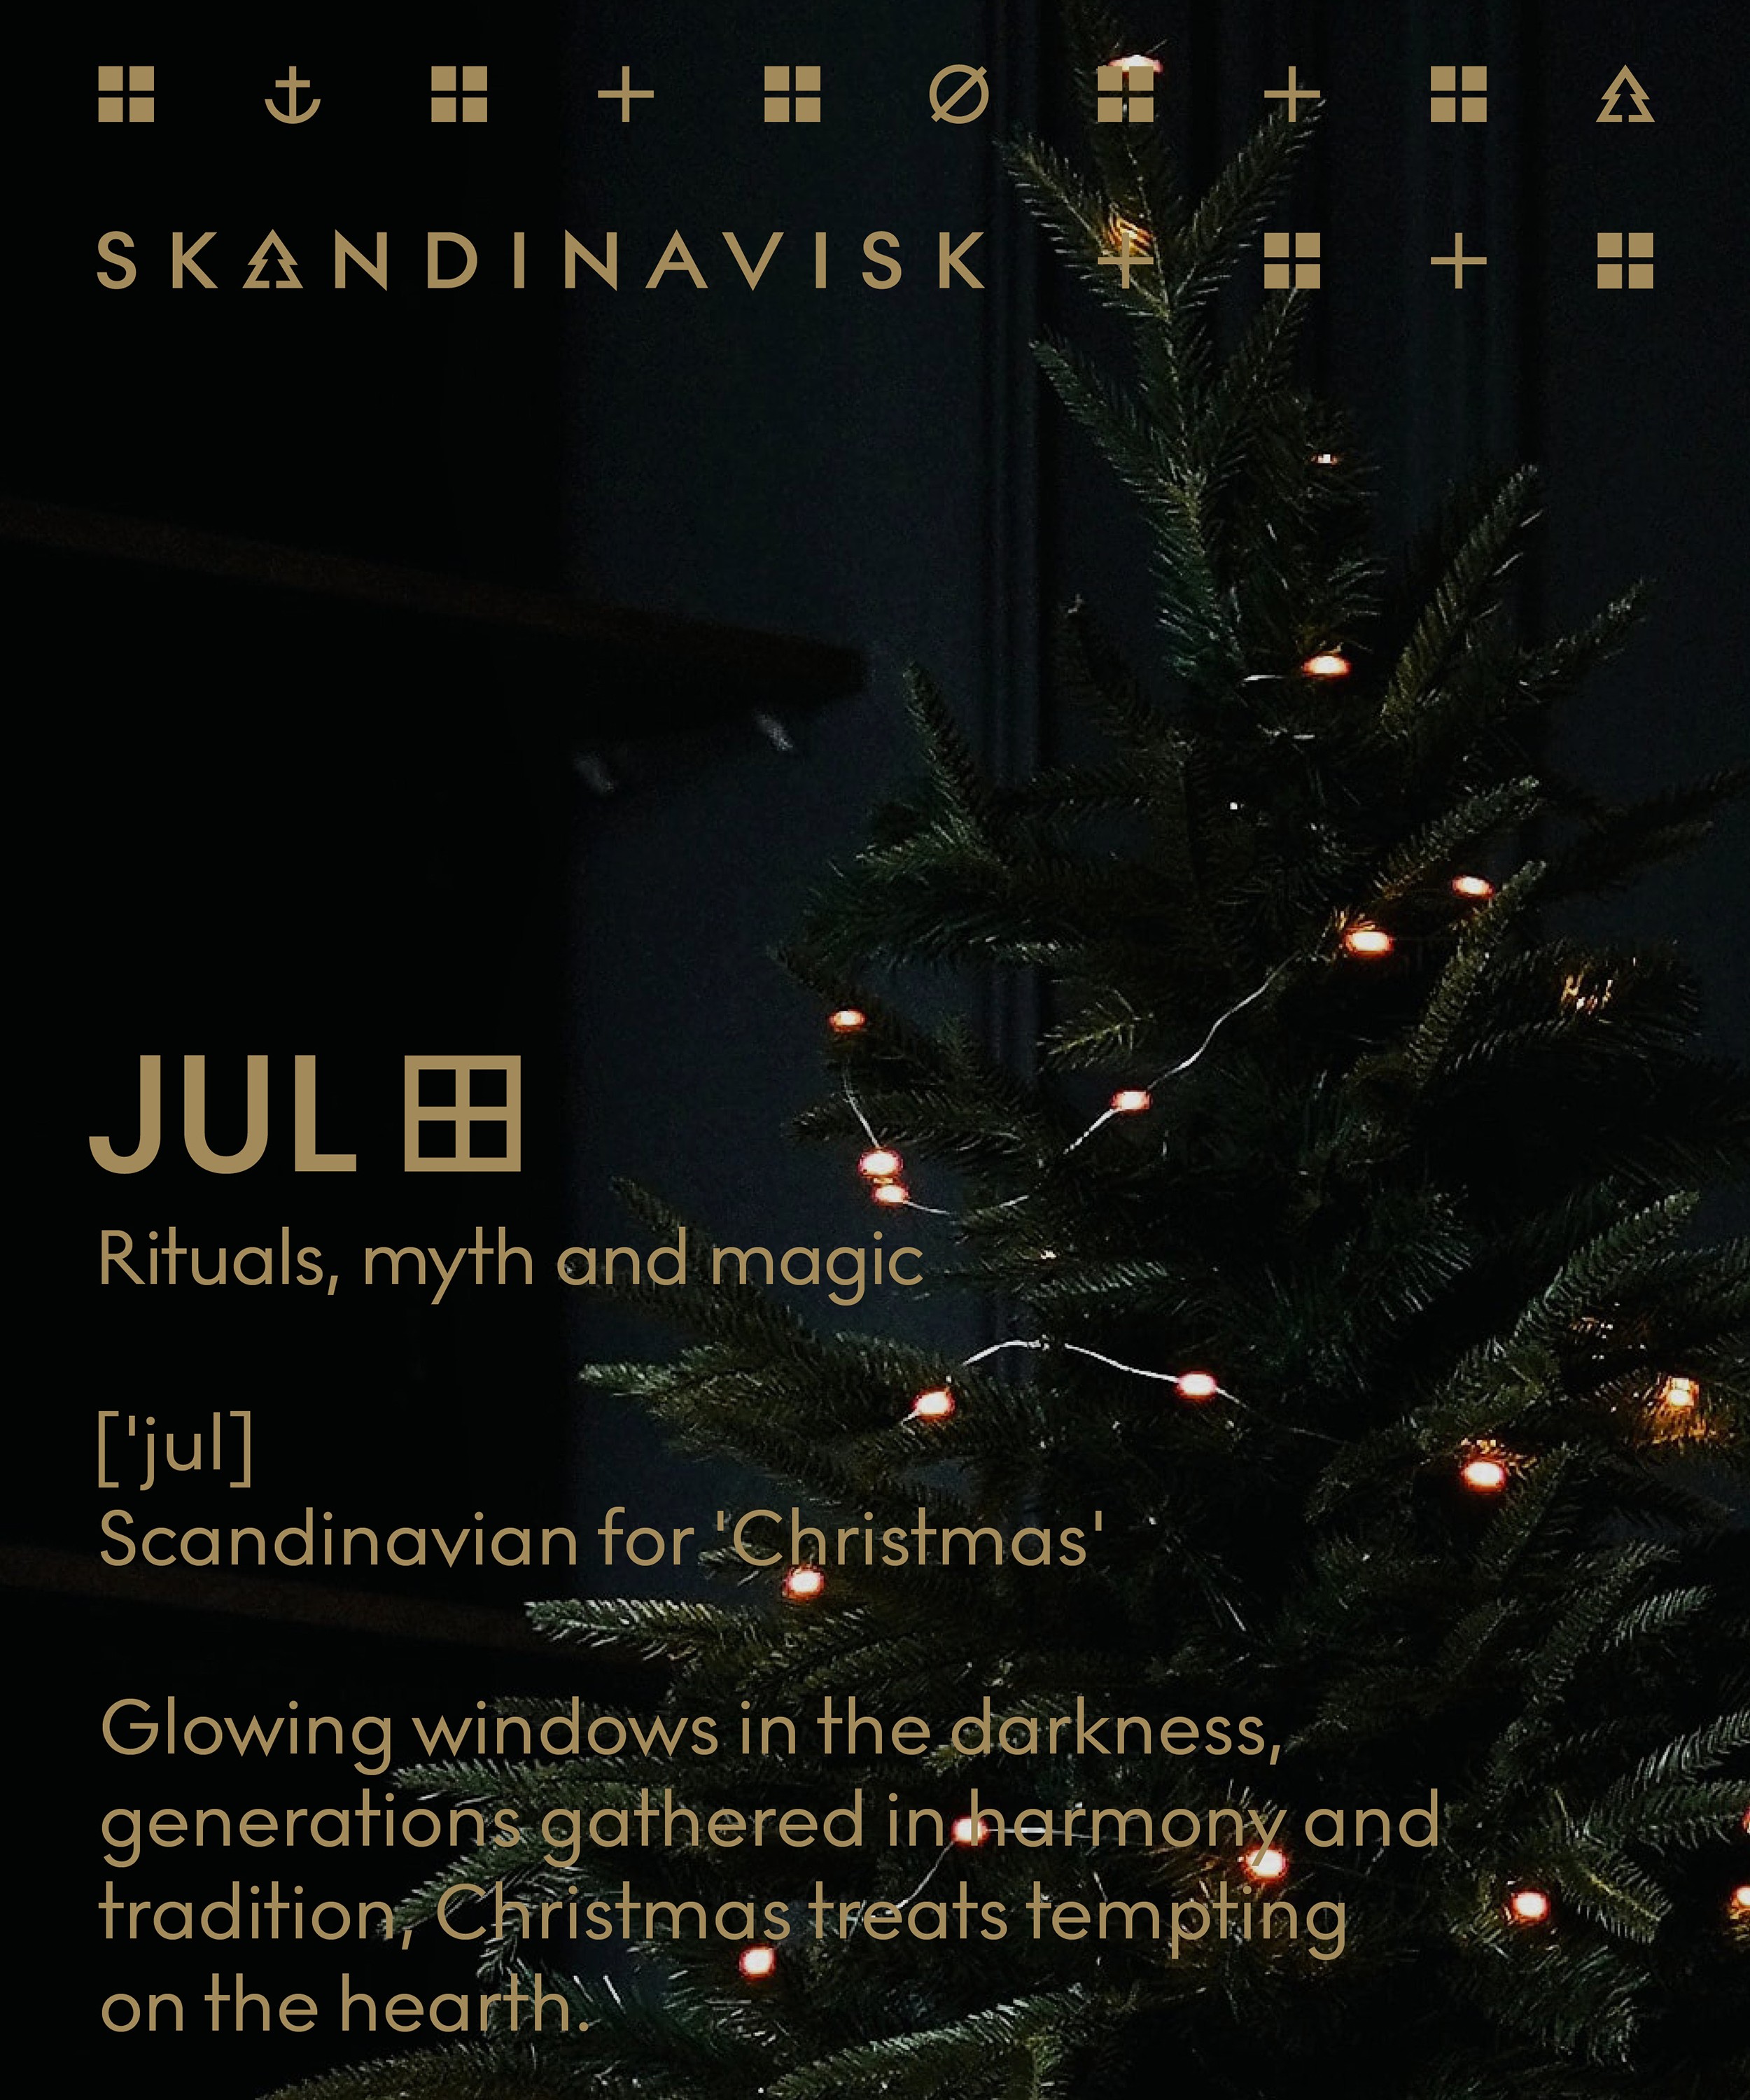 Skandinavisk Scented candle with lid, JUL, 3-wick